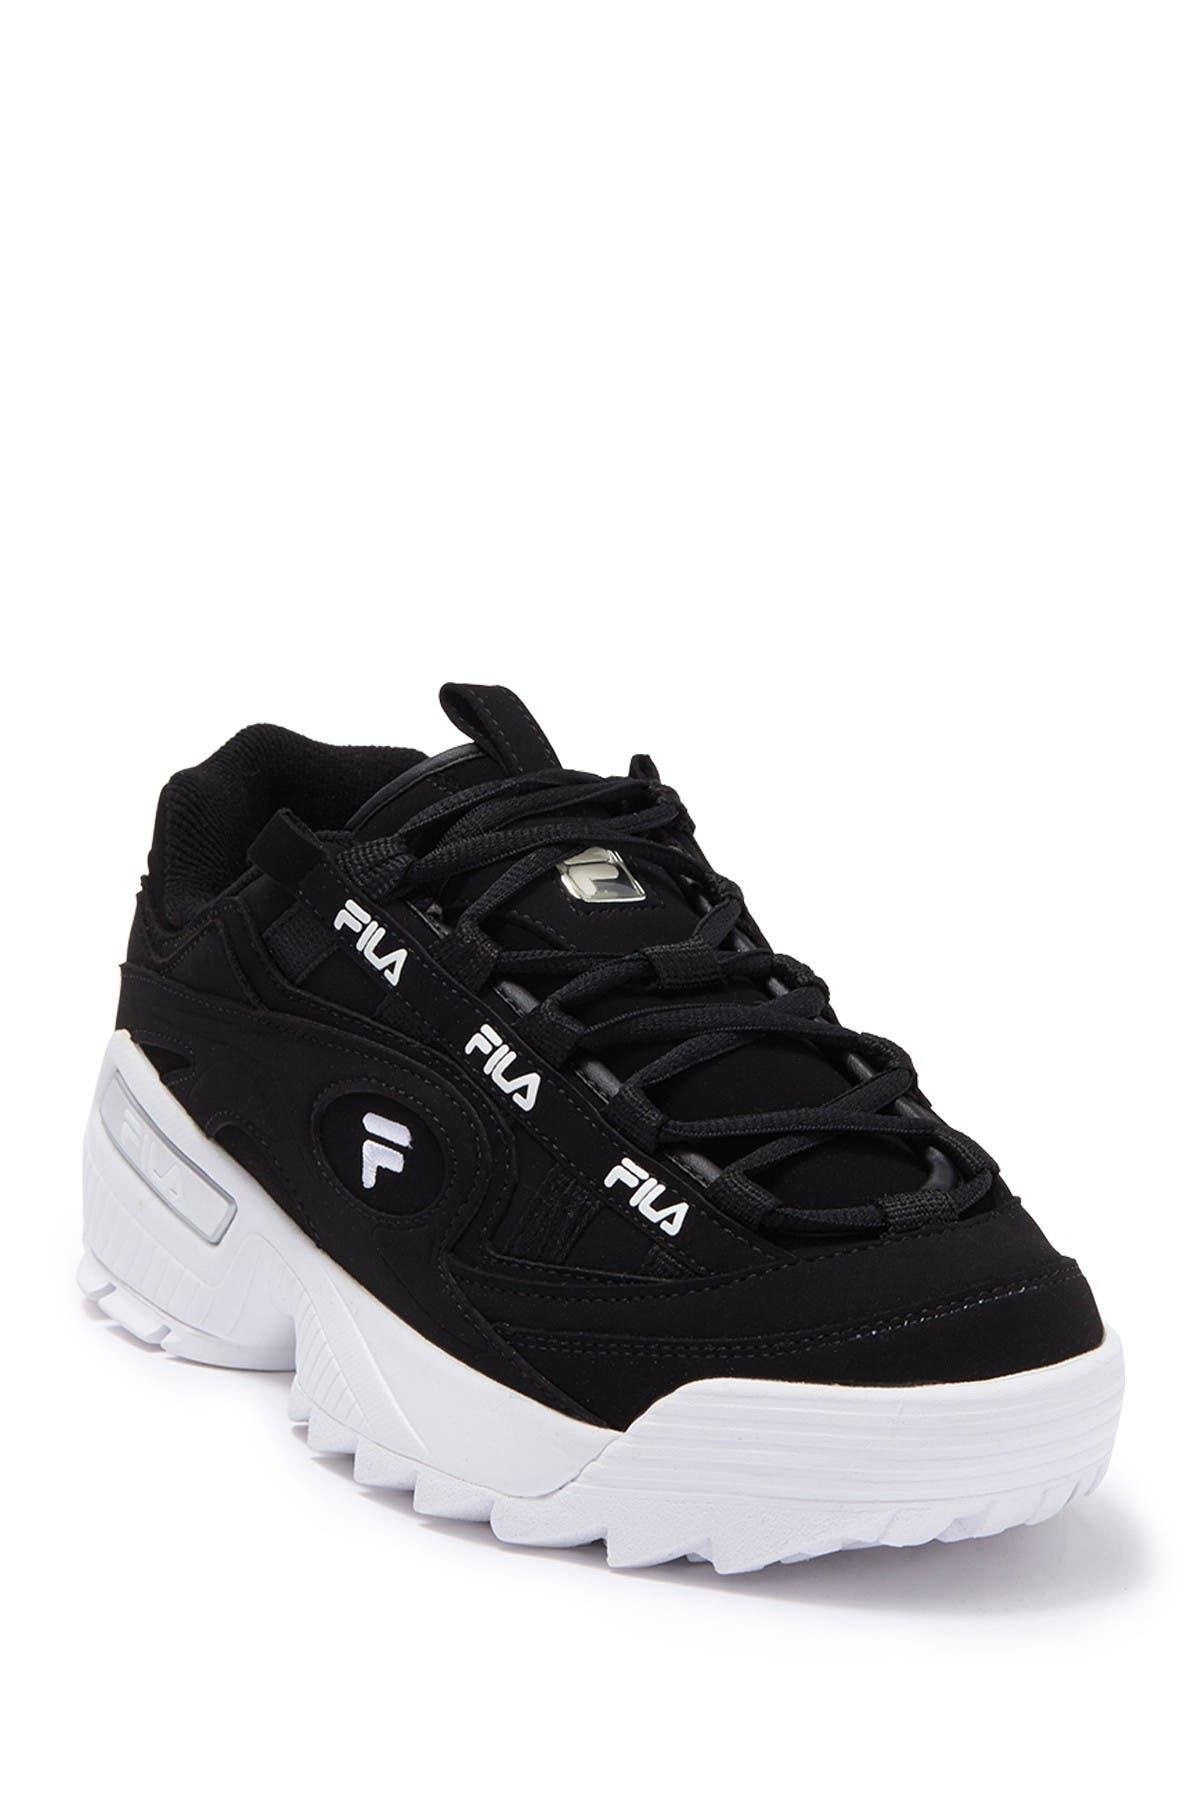 Fila Foglia chunky-sole sneakers - ShopStyle